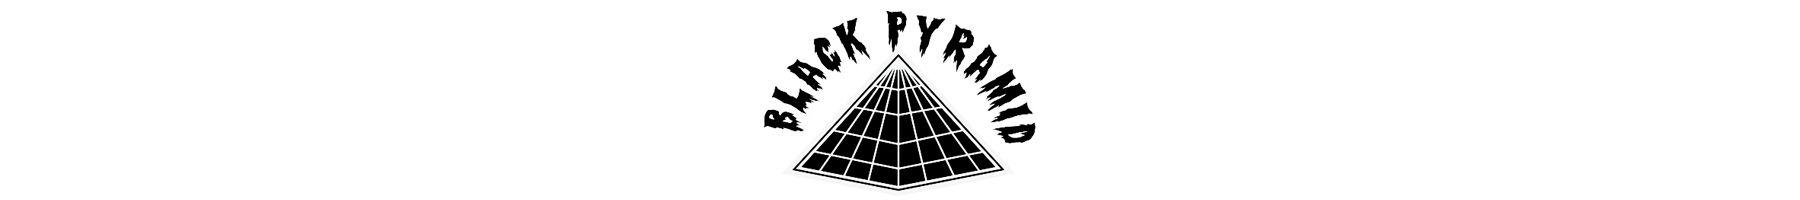 Black Pyramid Clothing Logo - Shop & Find Men's Black Pyramid Clothing And Fashion At DrJays.com